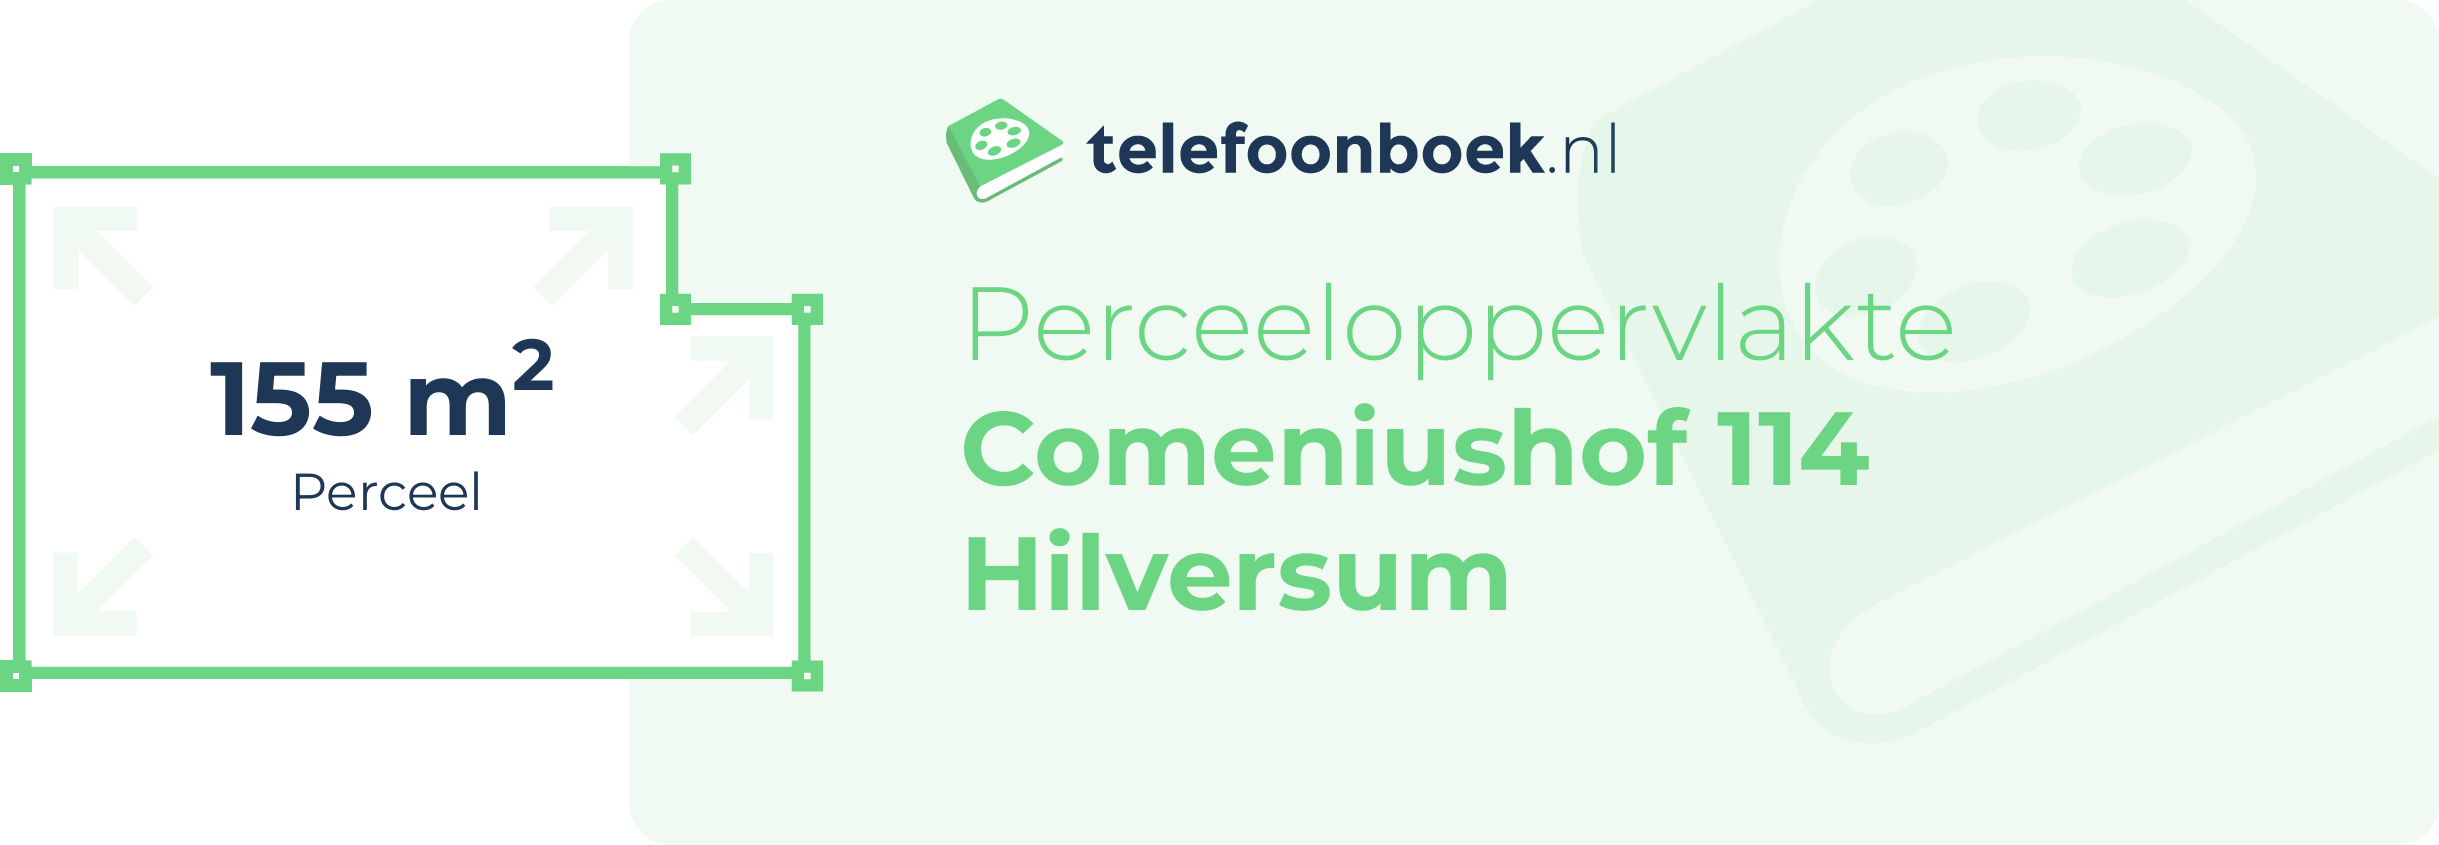 Perceeloppervlakte Comeniushof 114 Hilversum